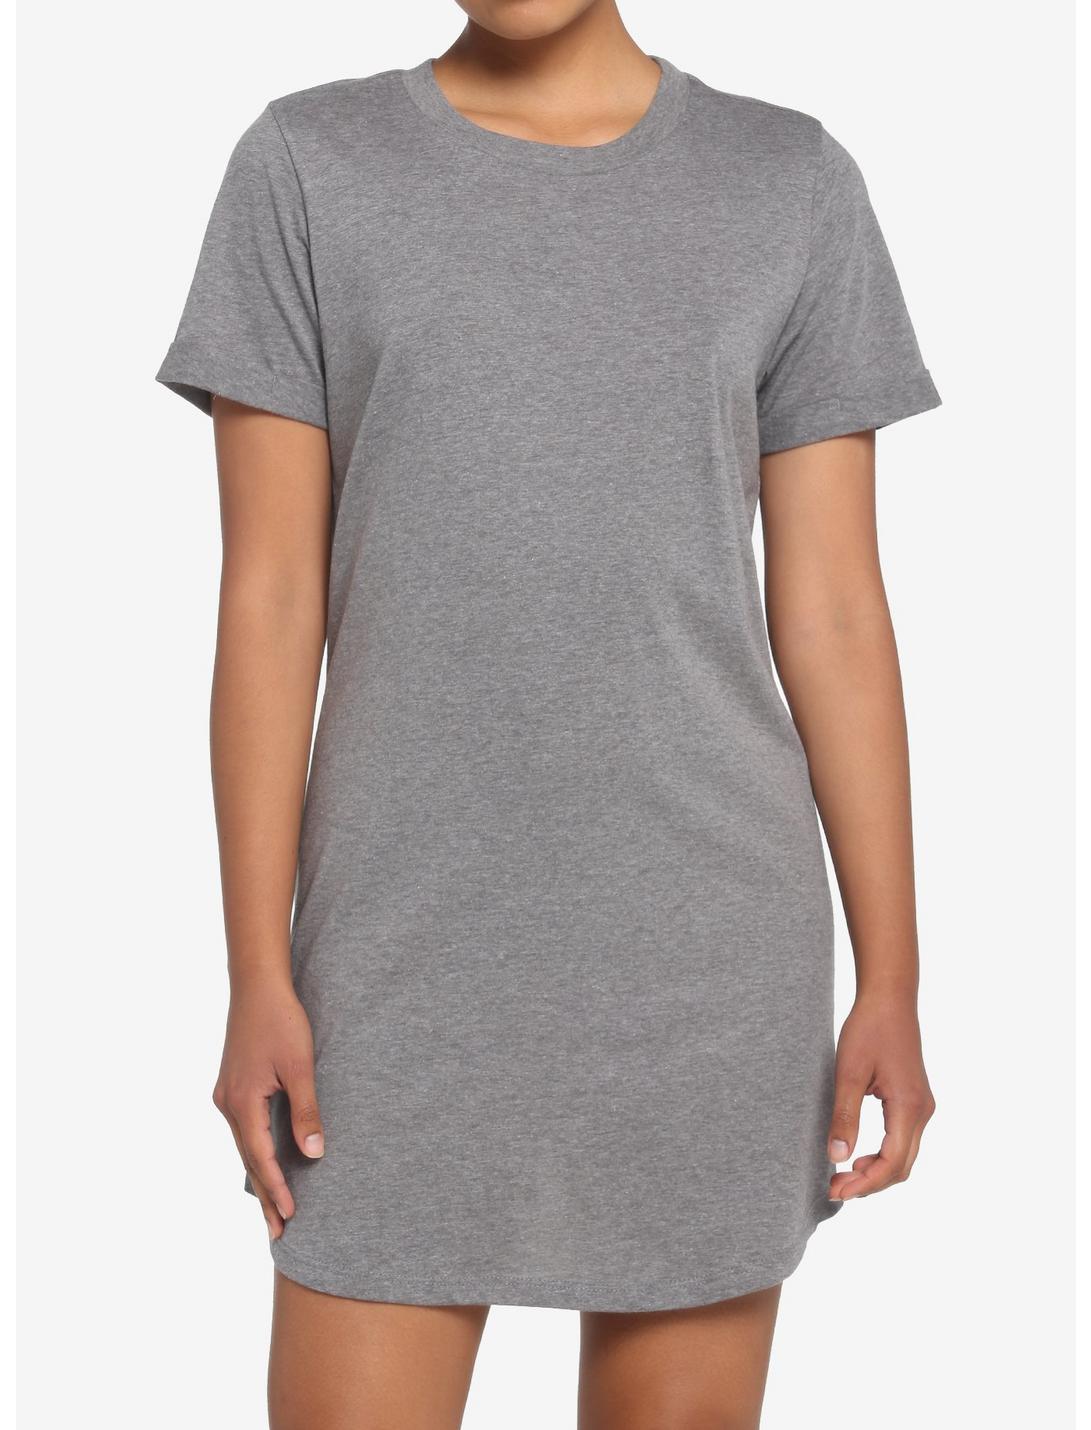 Heather Grey T-Shirt Dress, HEATHER GREY, hi-res